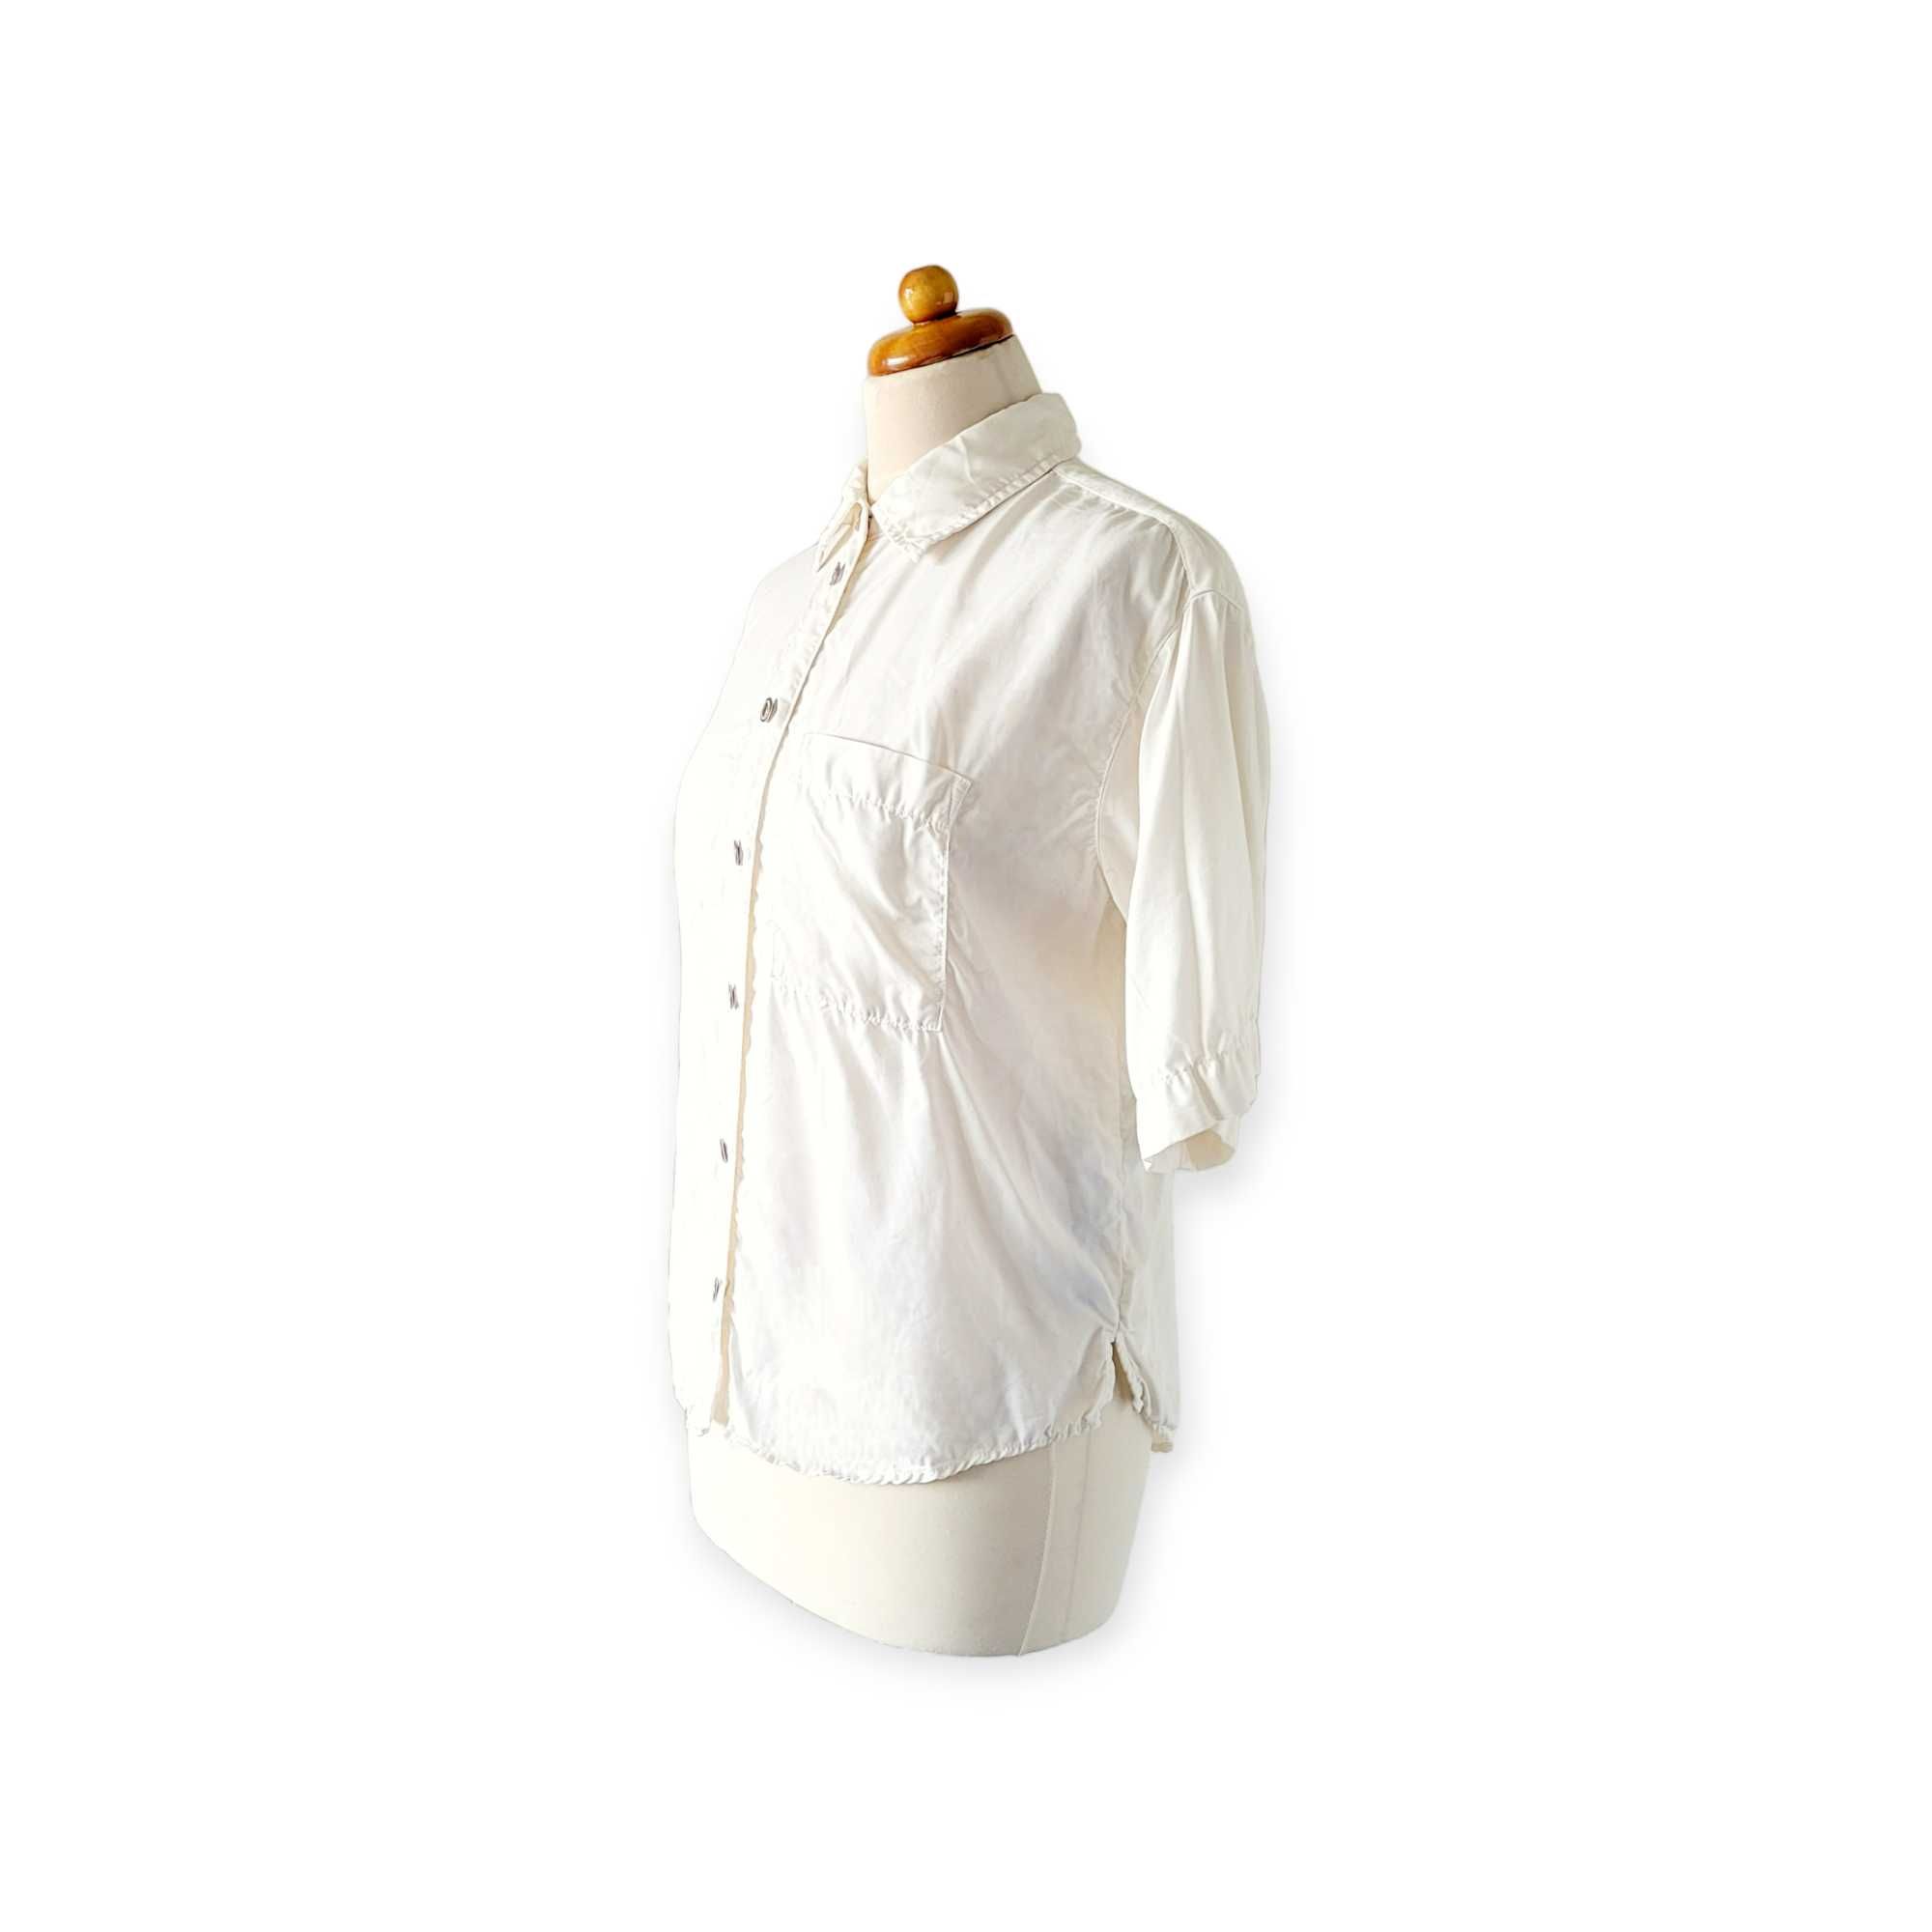 Biała kremowa koszula damska S Zara 100% lyocell basic bluzka oversize